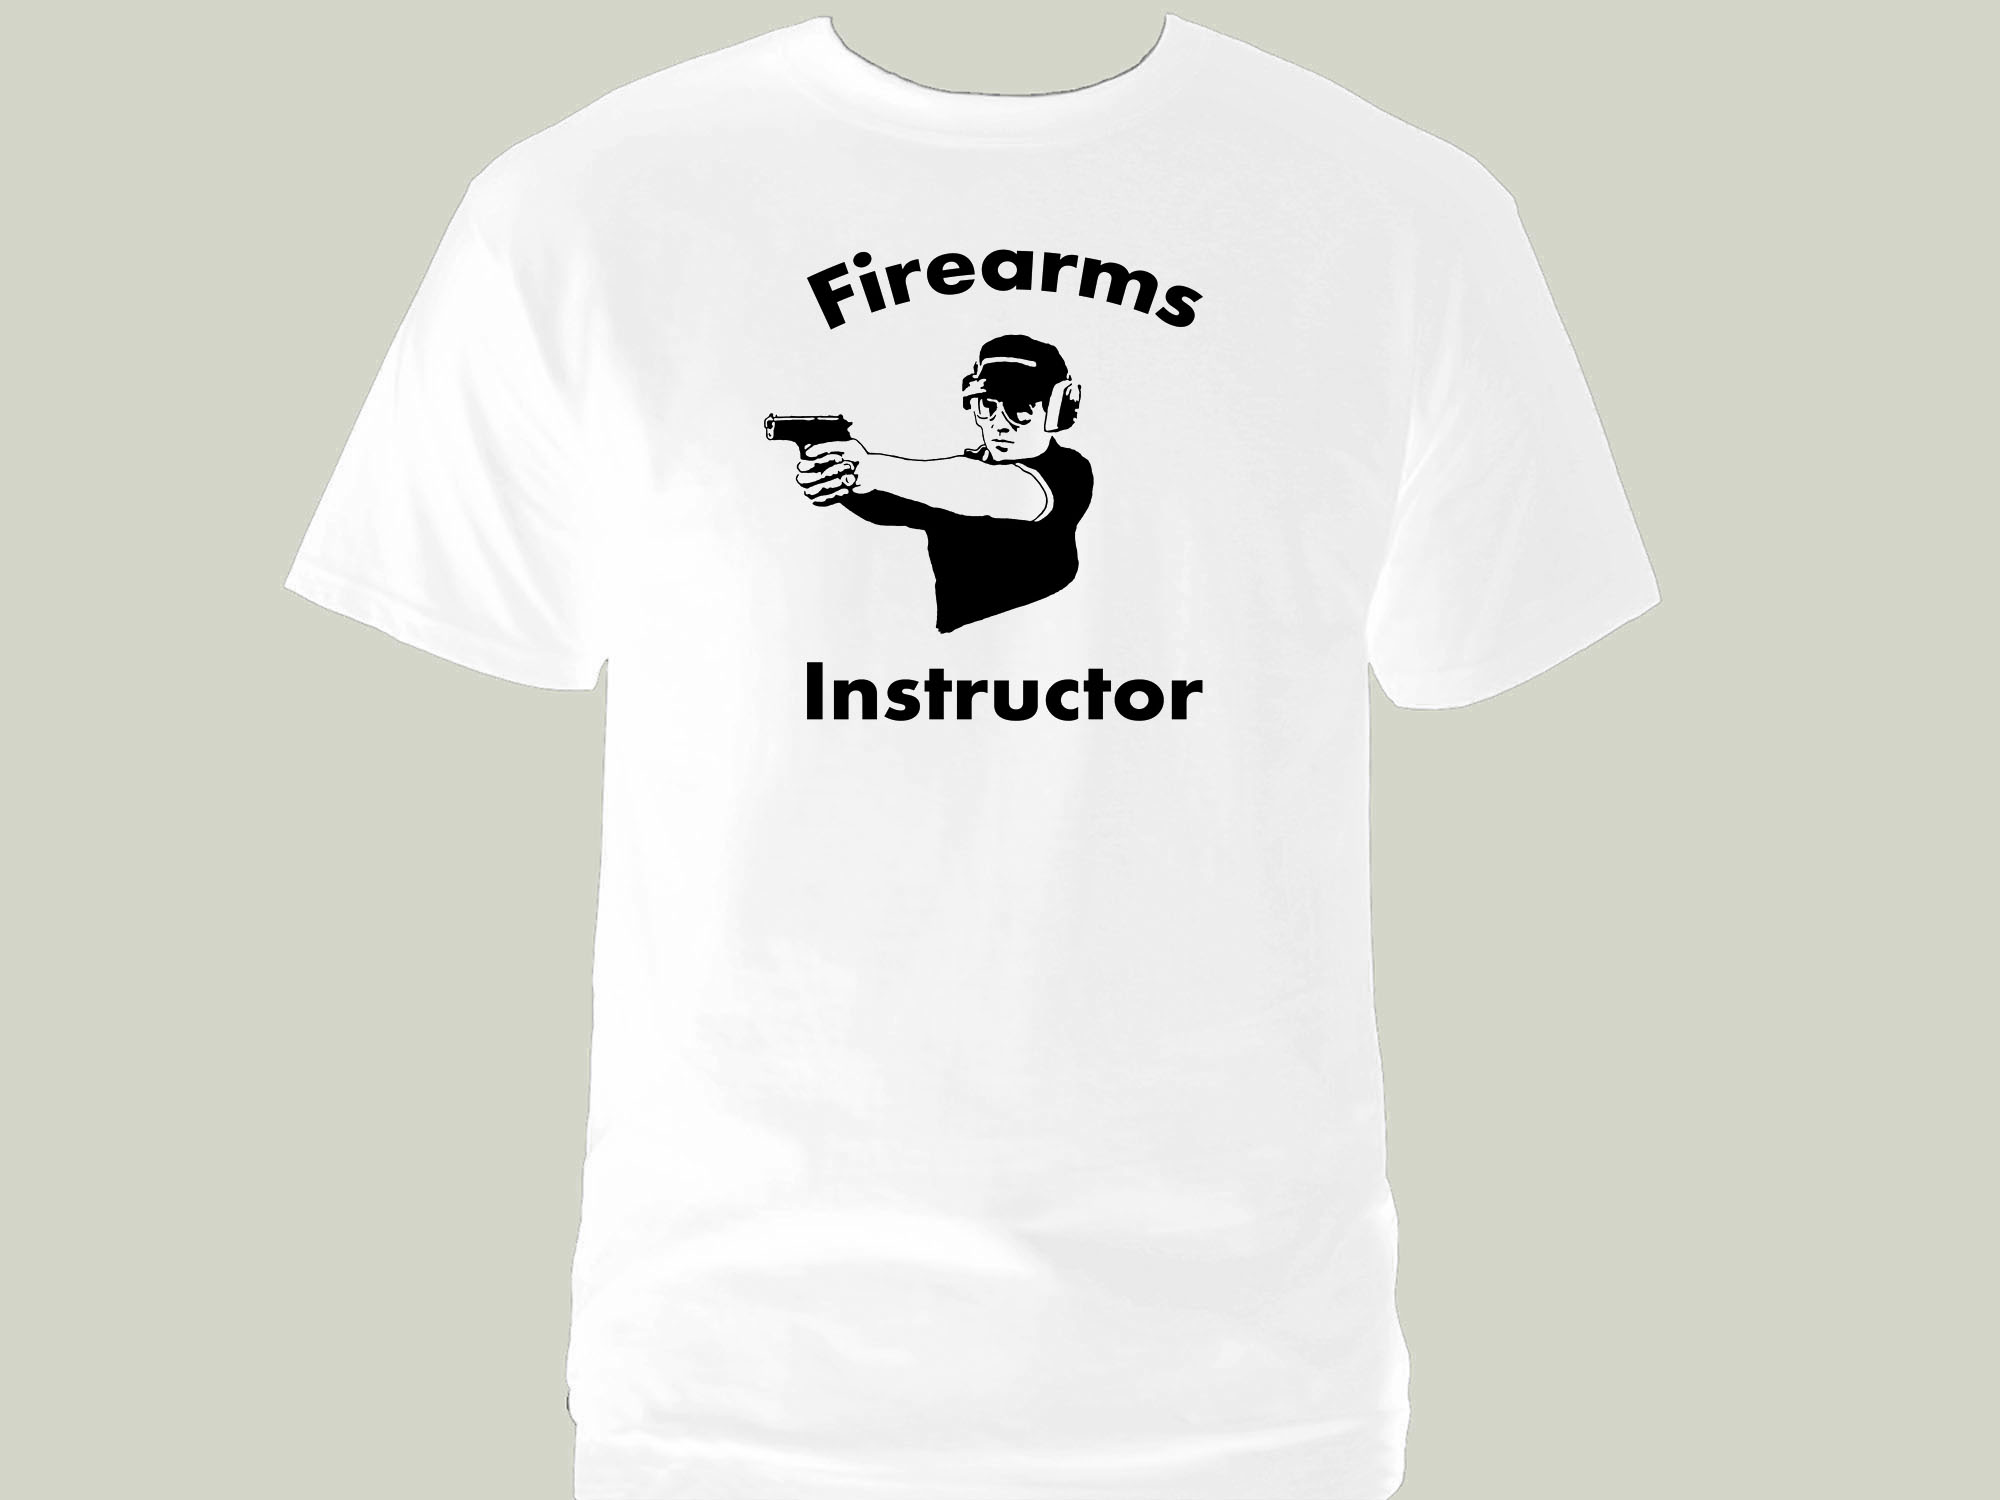 Firearms instructor marksman white t-shirt